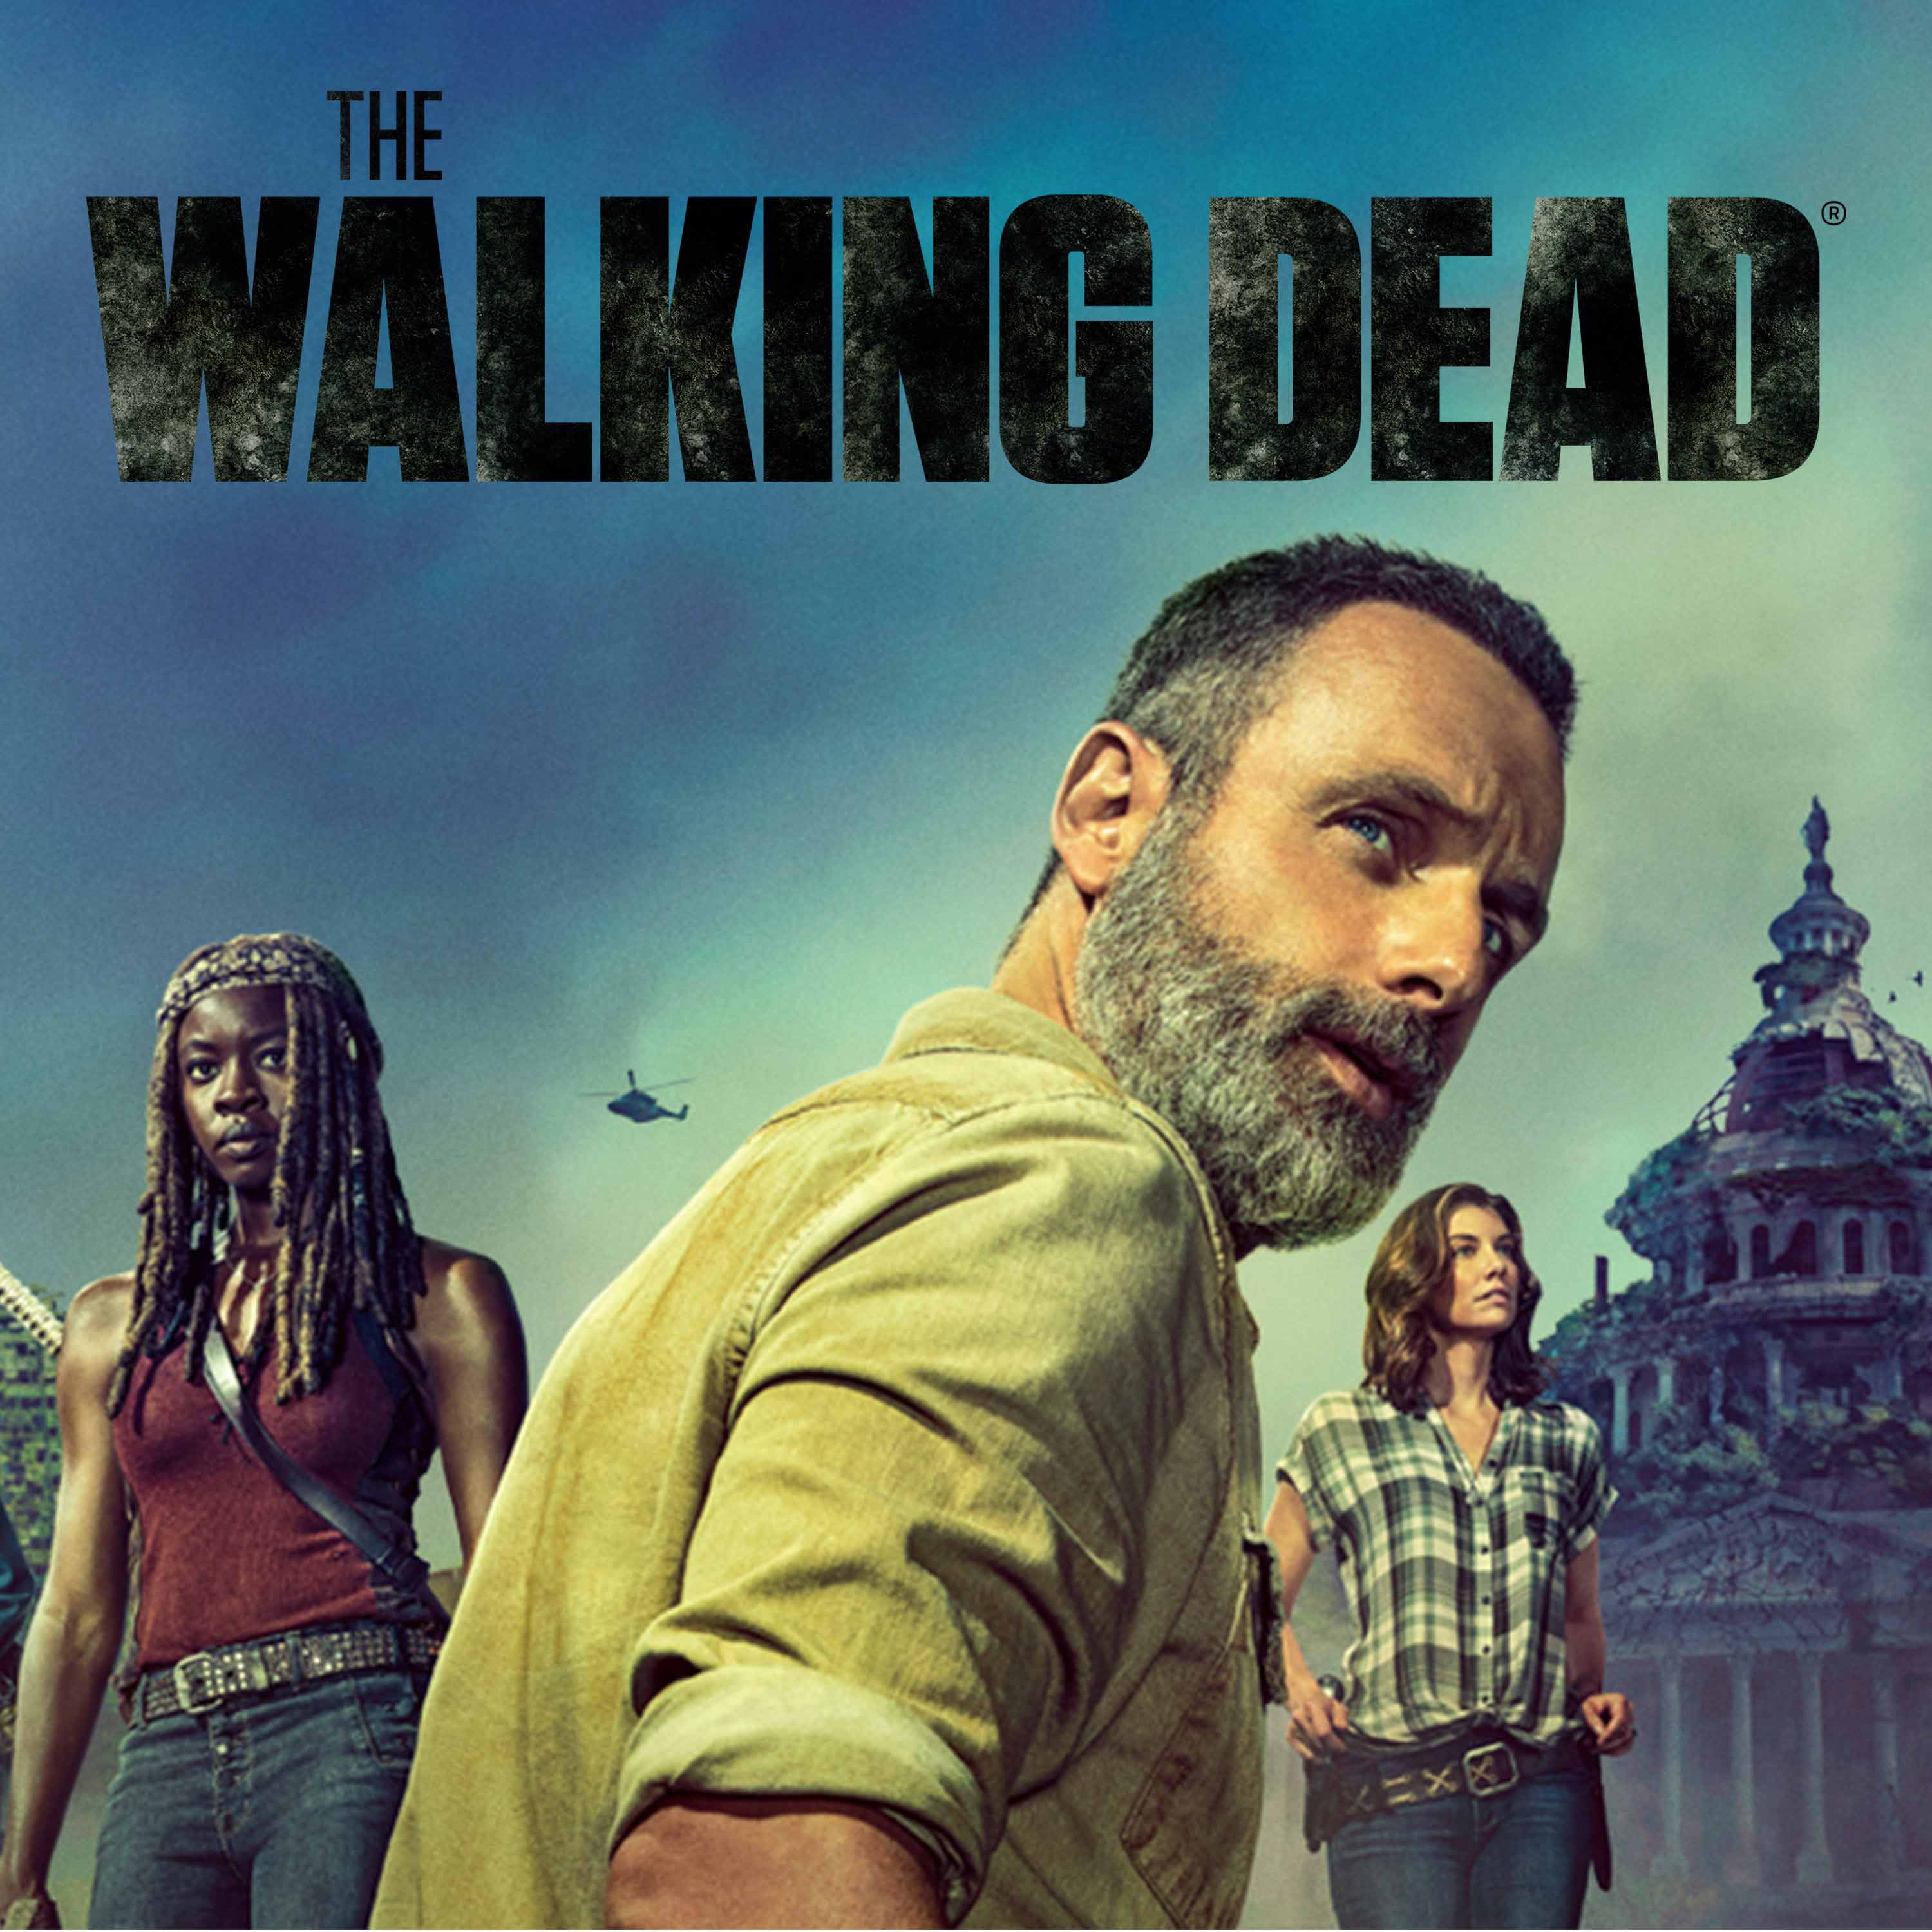 AMC Releases Comic-Com Art for The Walking Dead and Announces Comic-Con ...